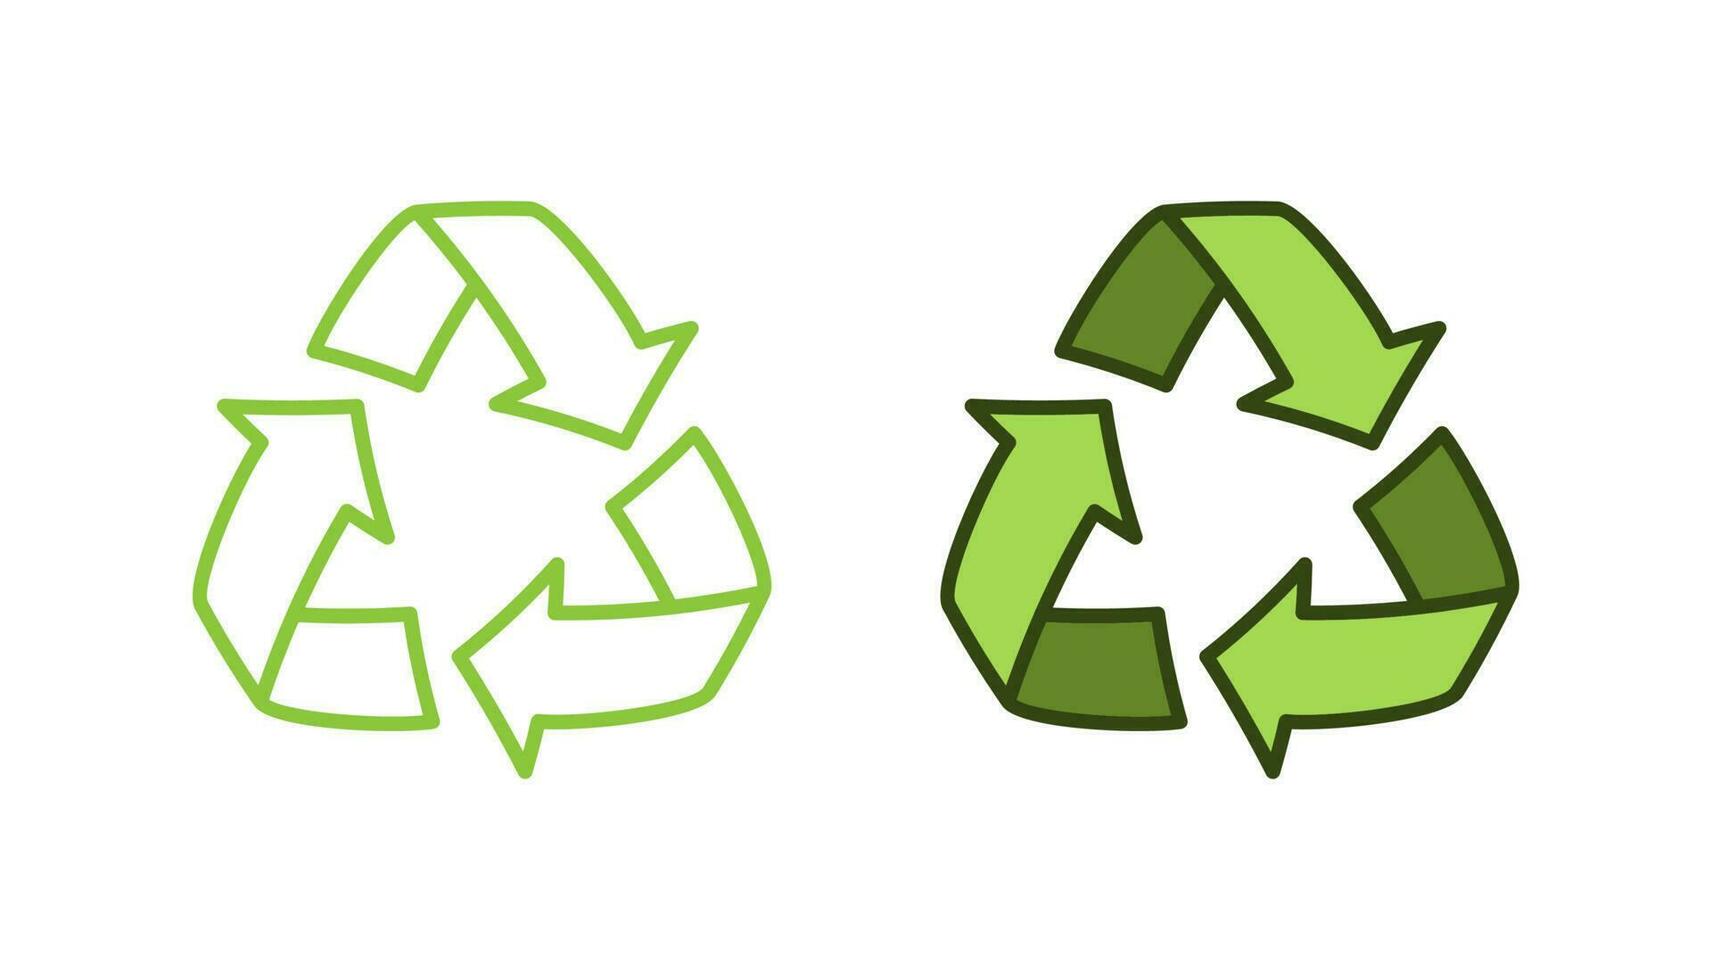 Recycle icon vector design